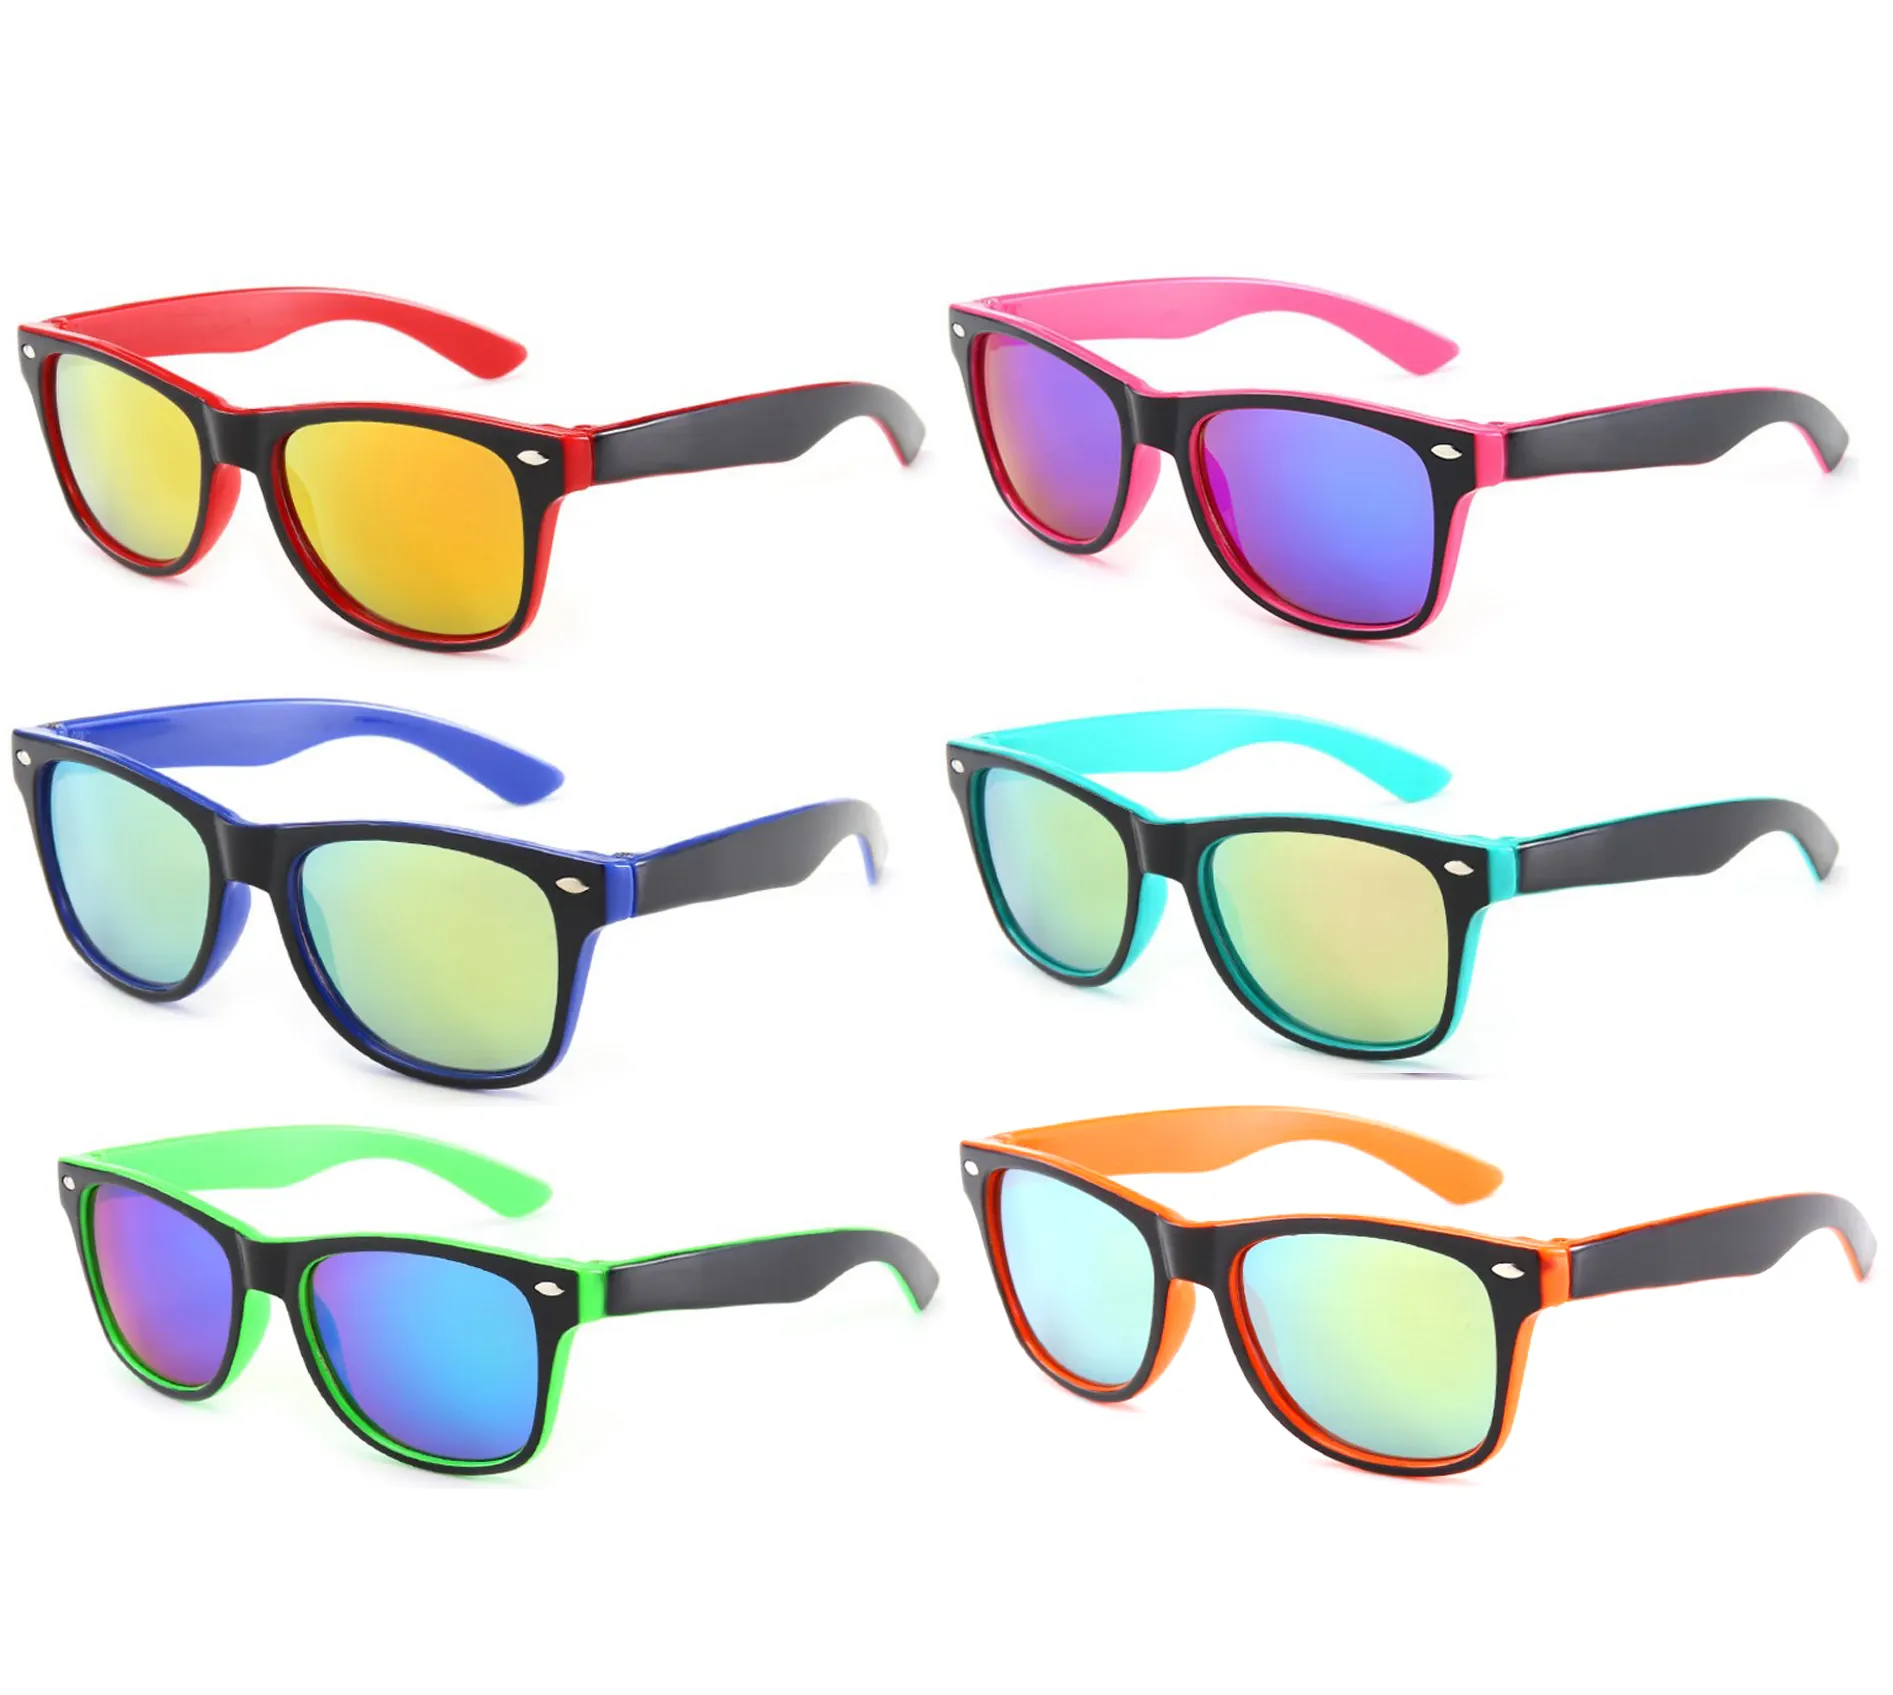 Wholesale PC sunglasses, tow-tone mirror lens sunglasses ,cheap plastic hinge sunglasses unisex UV protection.